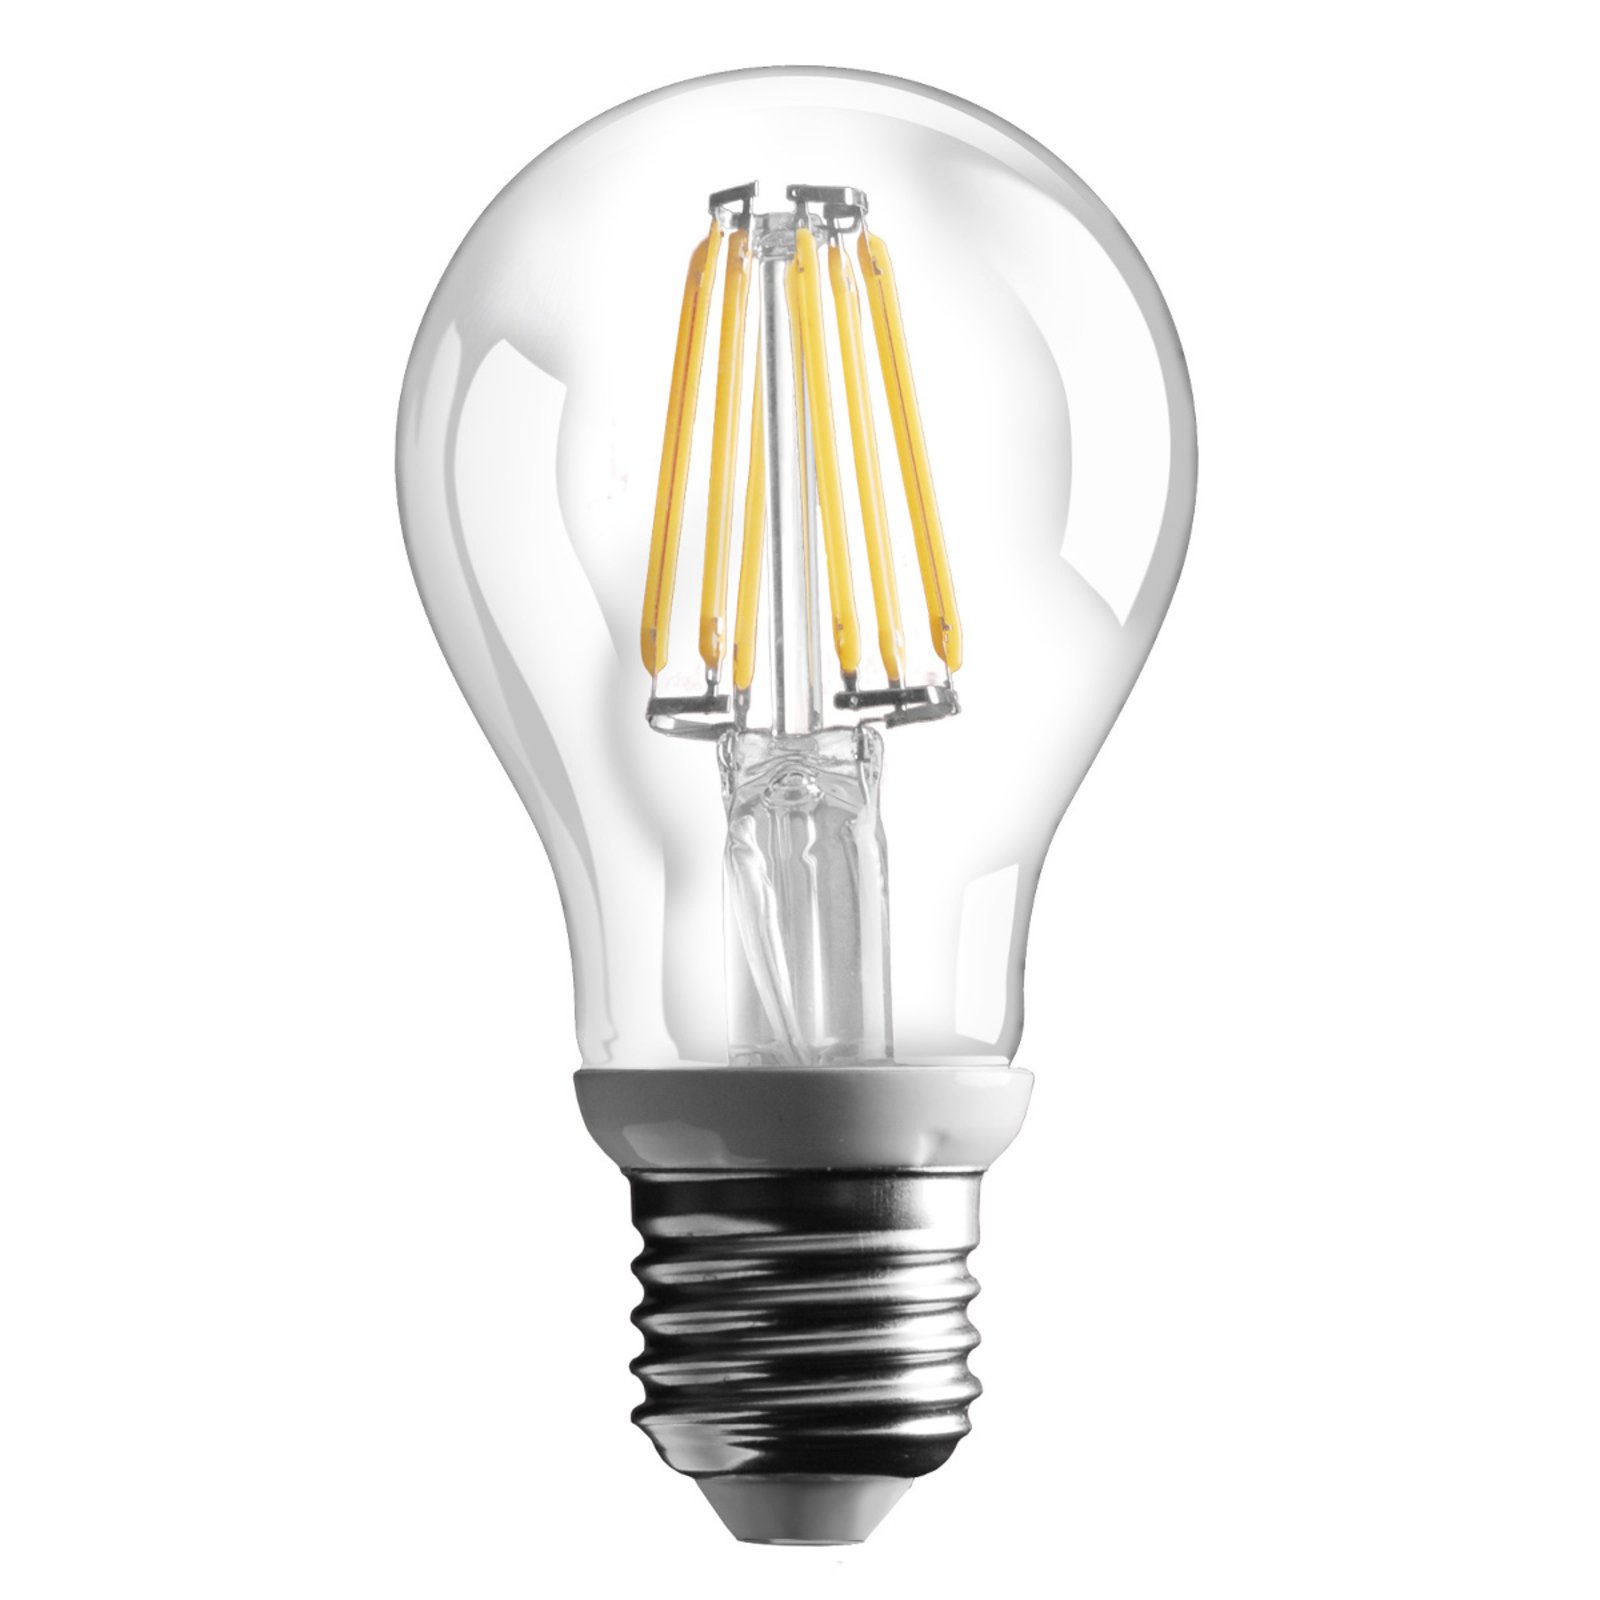 E27 6W LED filamentlamp met 800 lm, warmwit